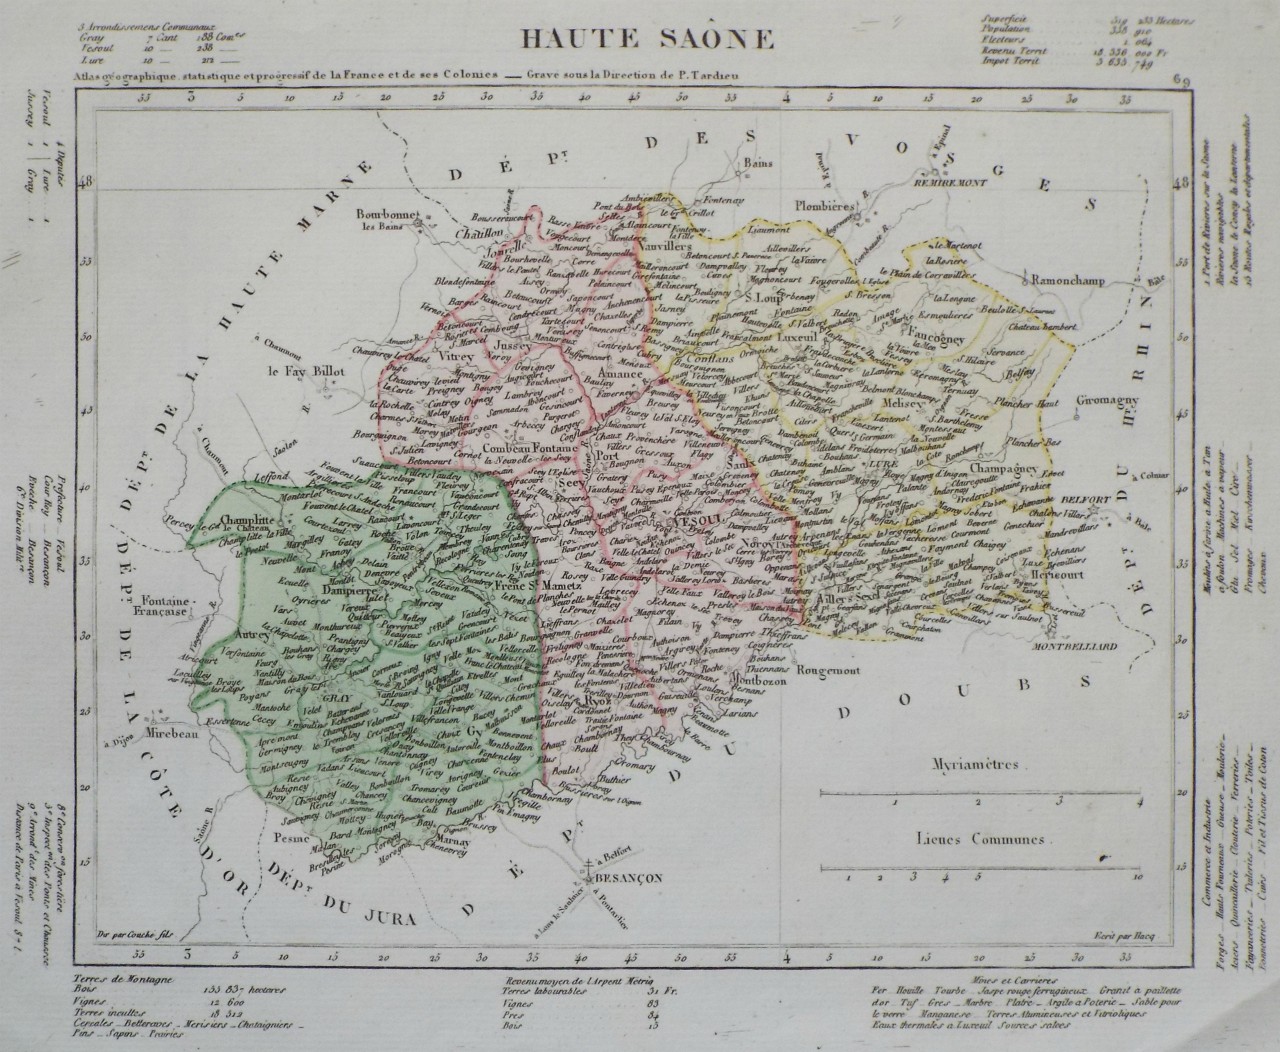 Map of Haute Saone